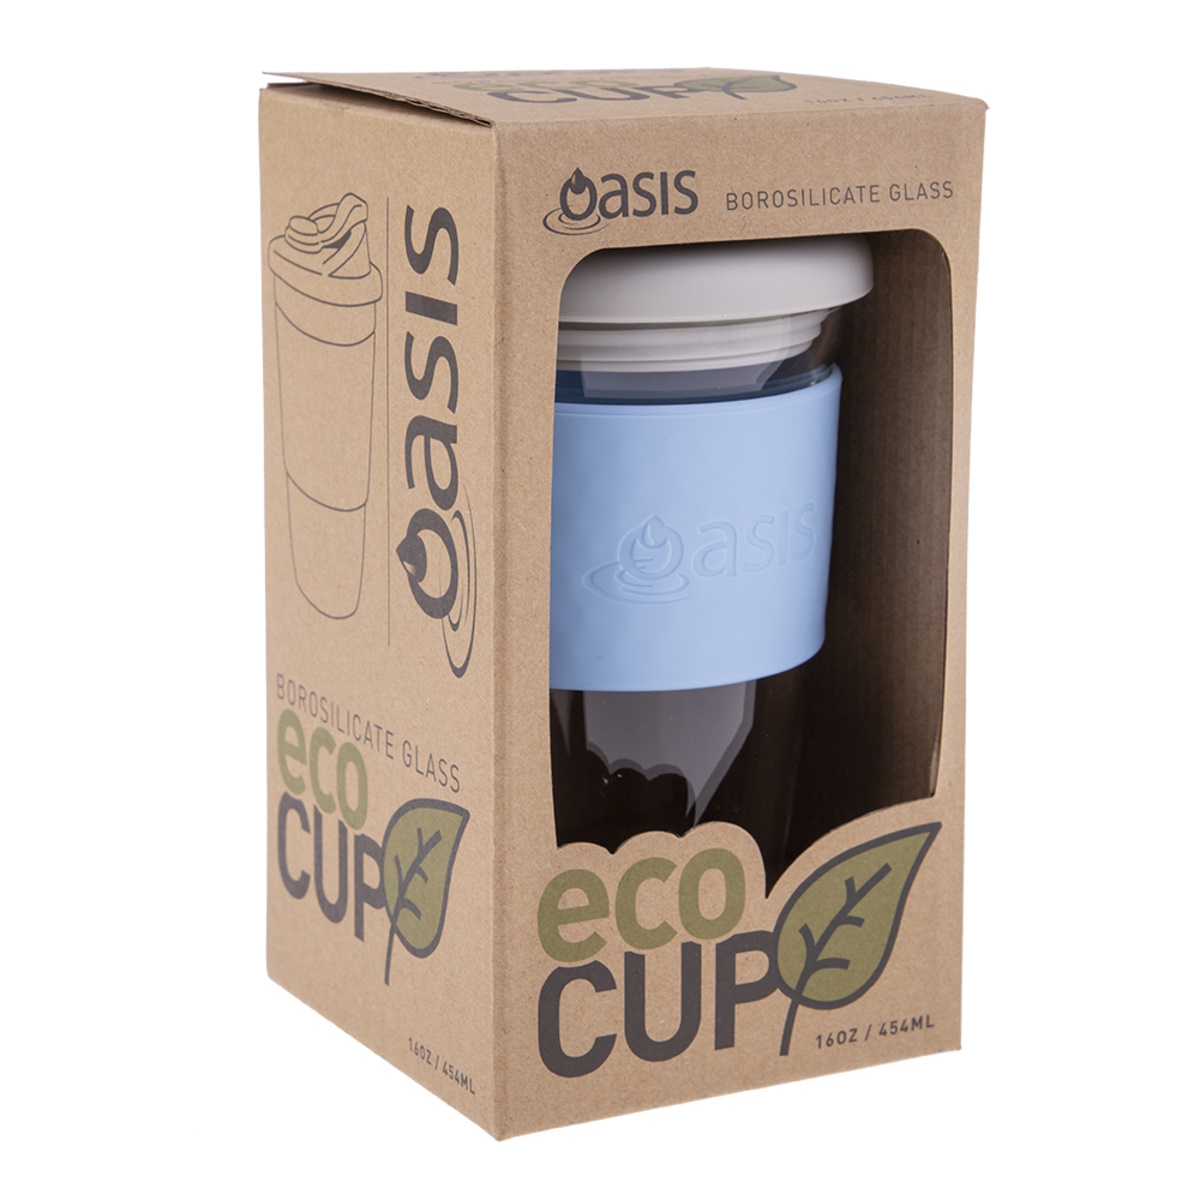 Oasis Borosilicate Glass Eco Cup 16oz-454ml Powder Blue